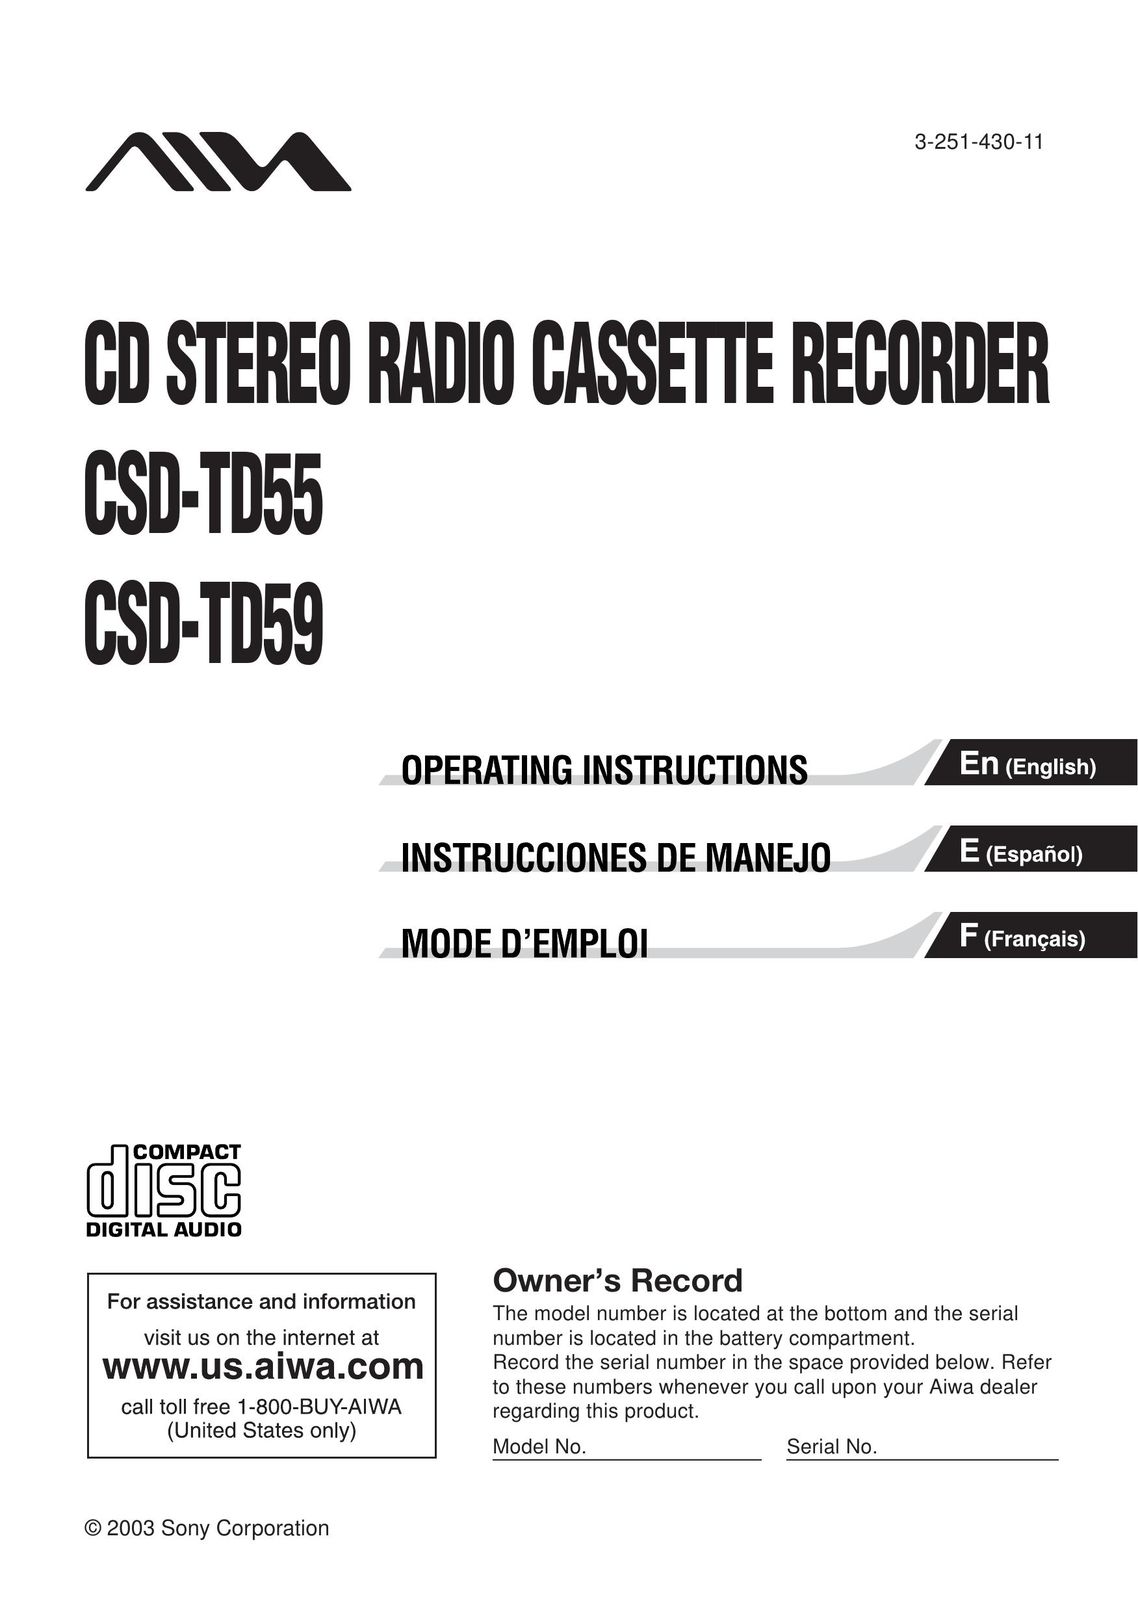 Aiwa CSD-TD59 Microcassette Recorder User Manual